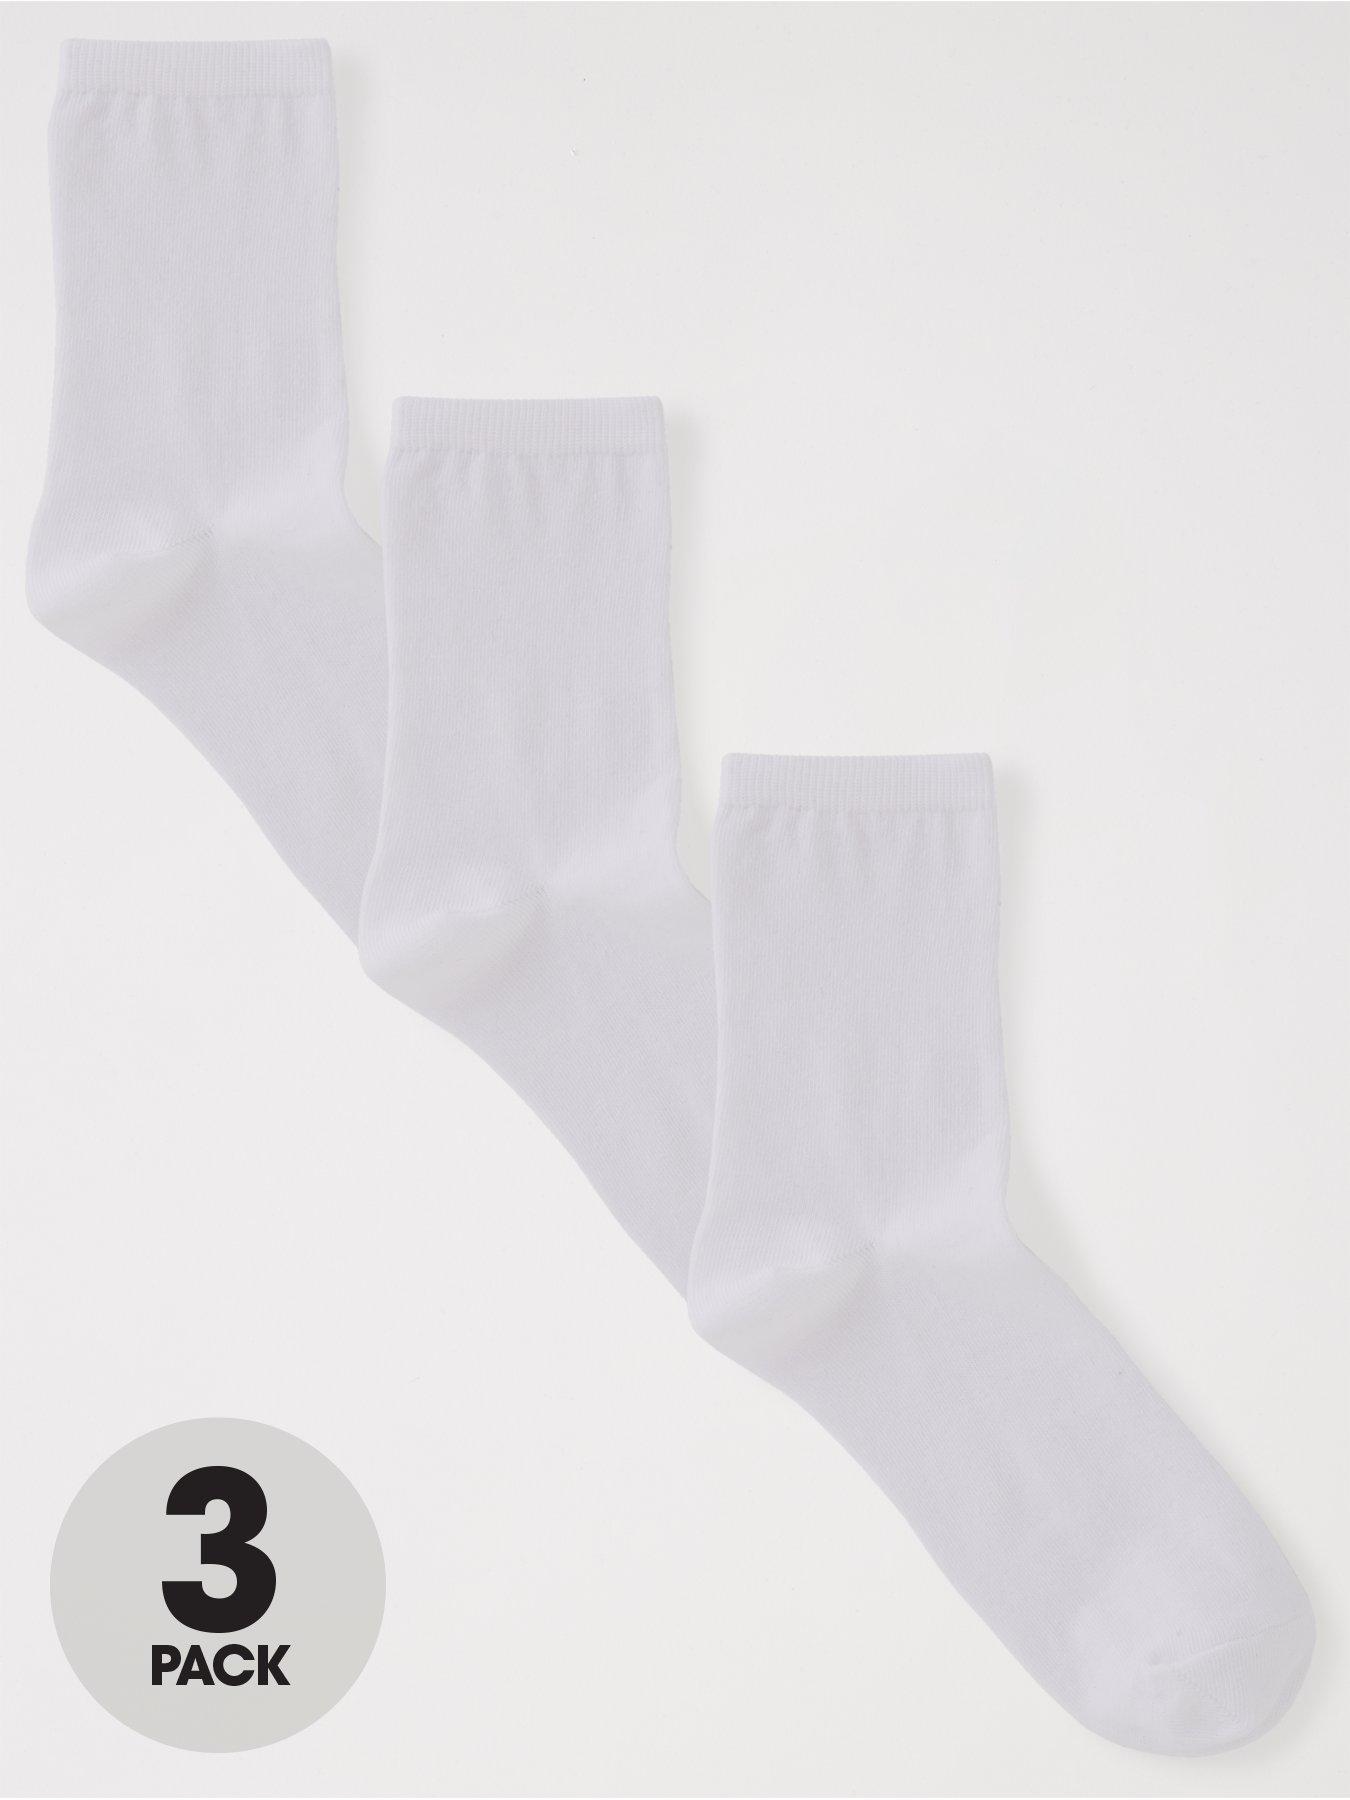 Womens Ellesse Low Cut 3 Pairs Socks Pack Ankle Sock Trainer Black Size 4-8 